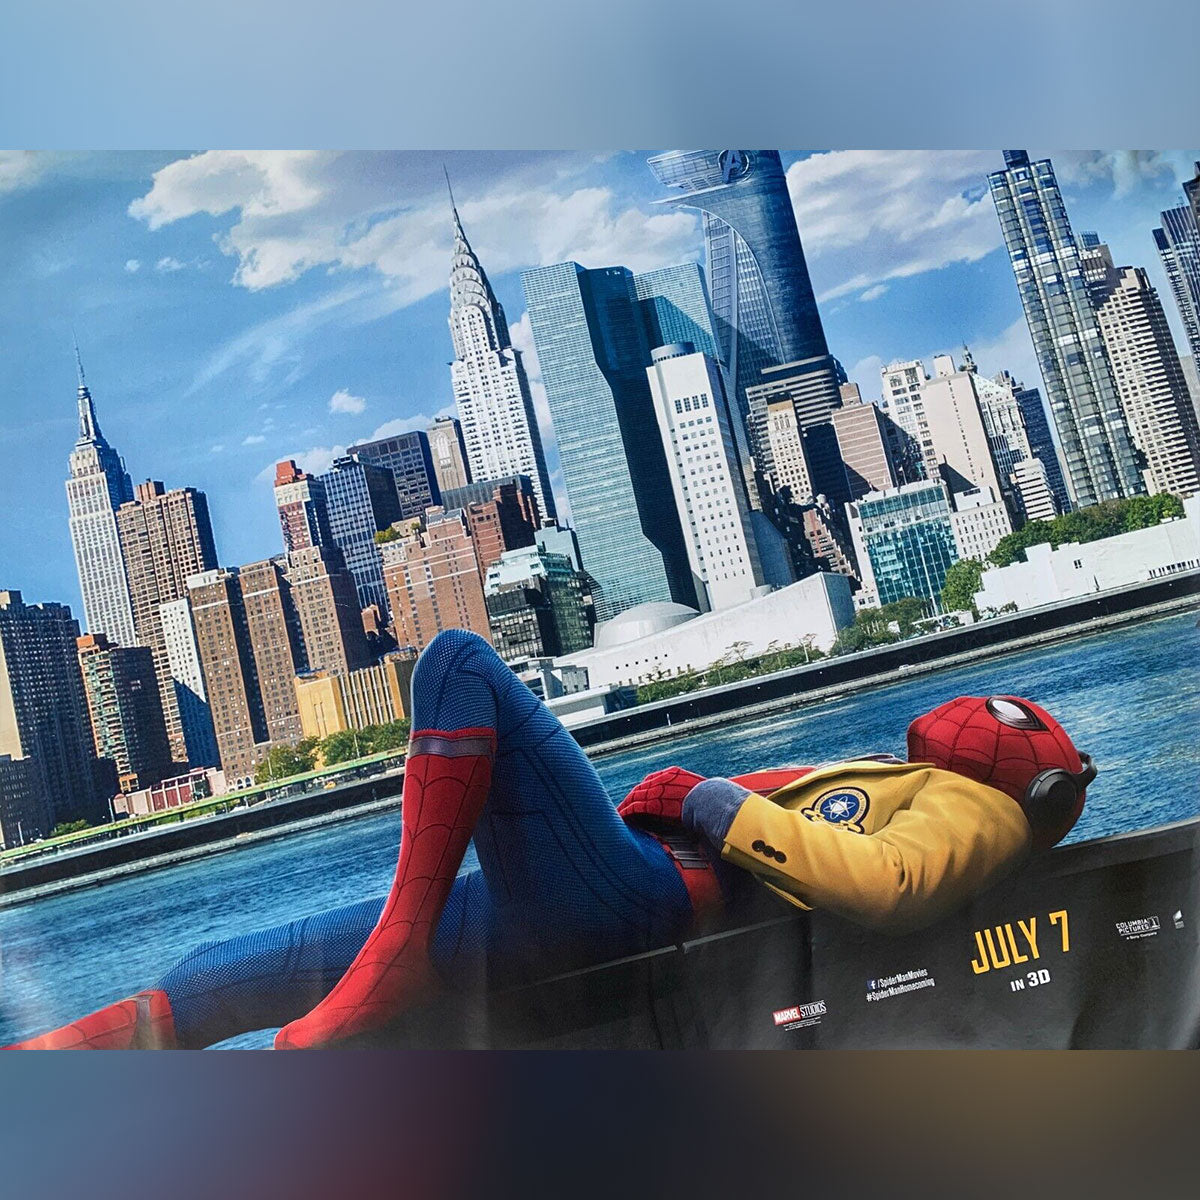 Spider-Man: Homecoming (2017)